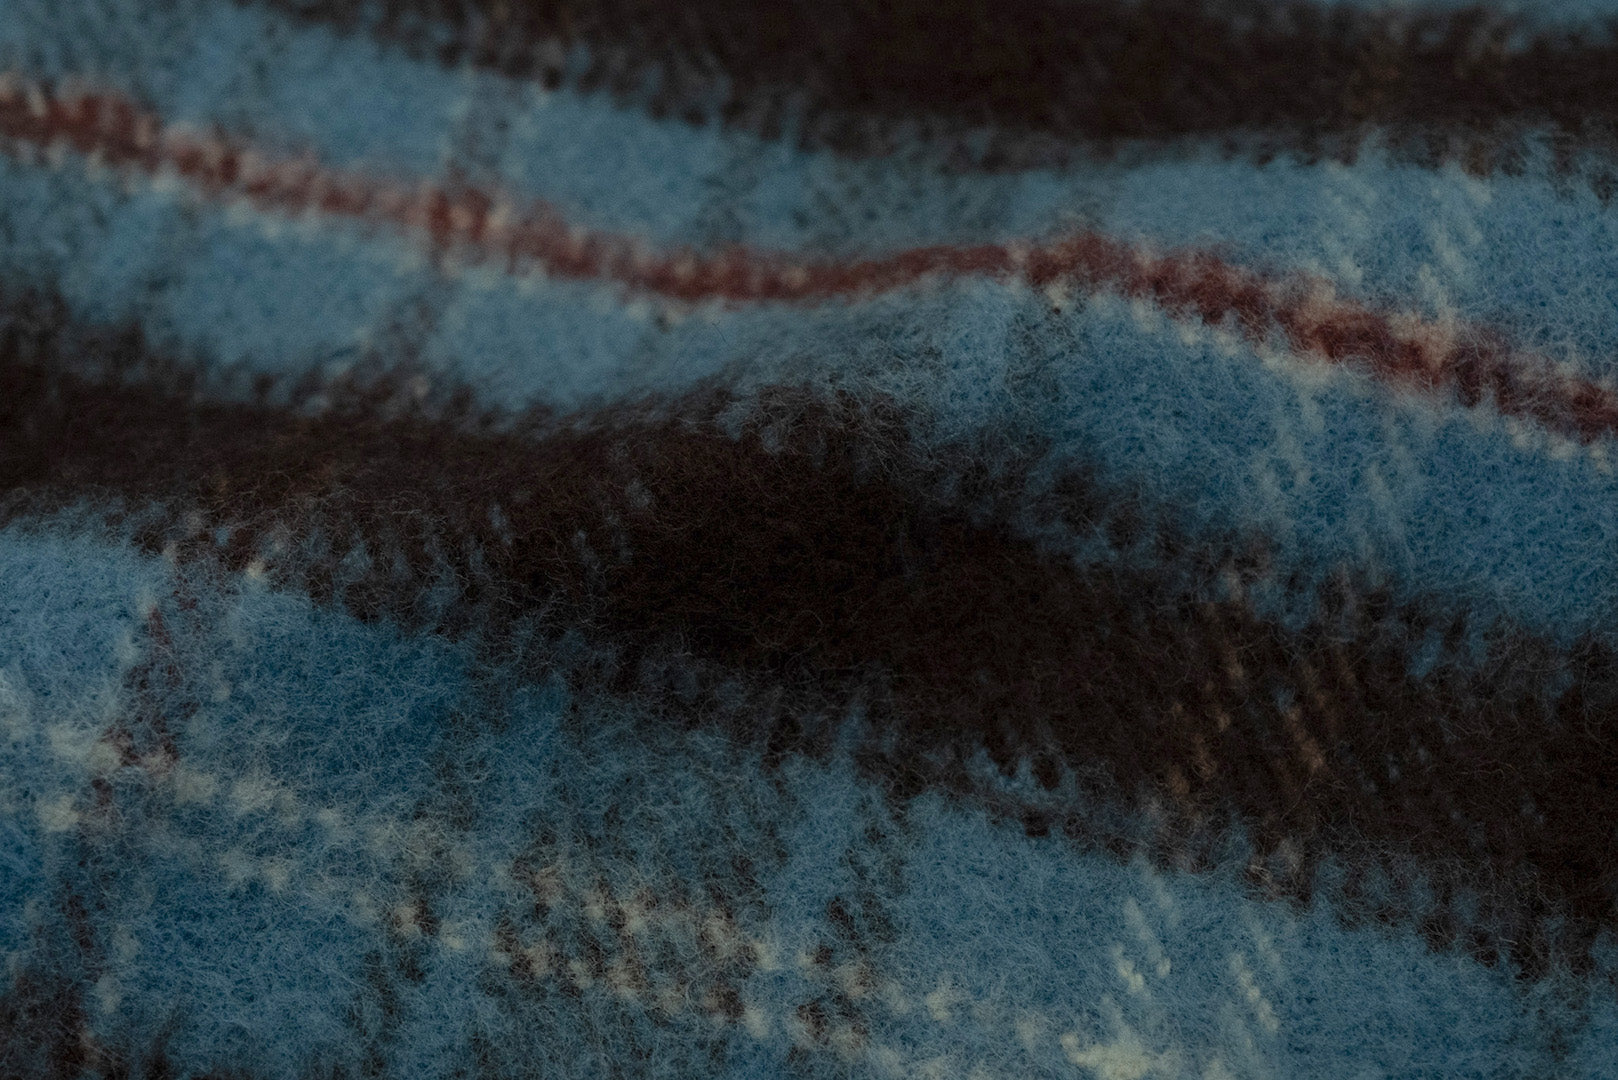 Iron Heart Ultra-Heavy Flannel Blanket Check Western Shirt (Opal Blue)